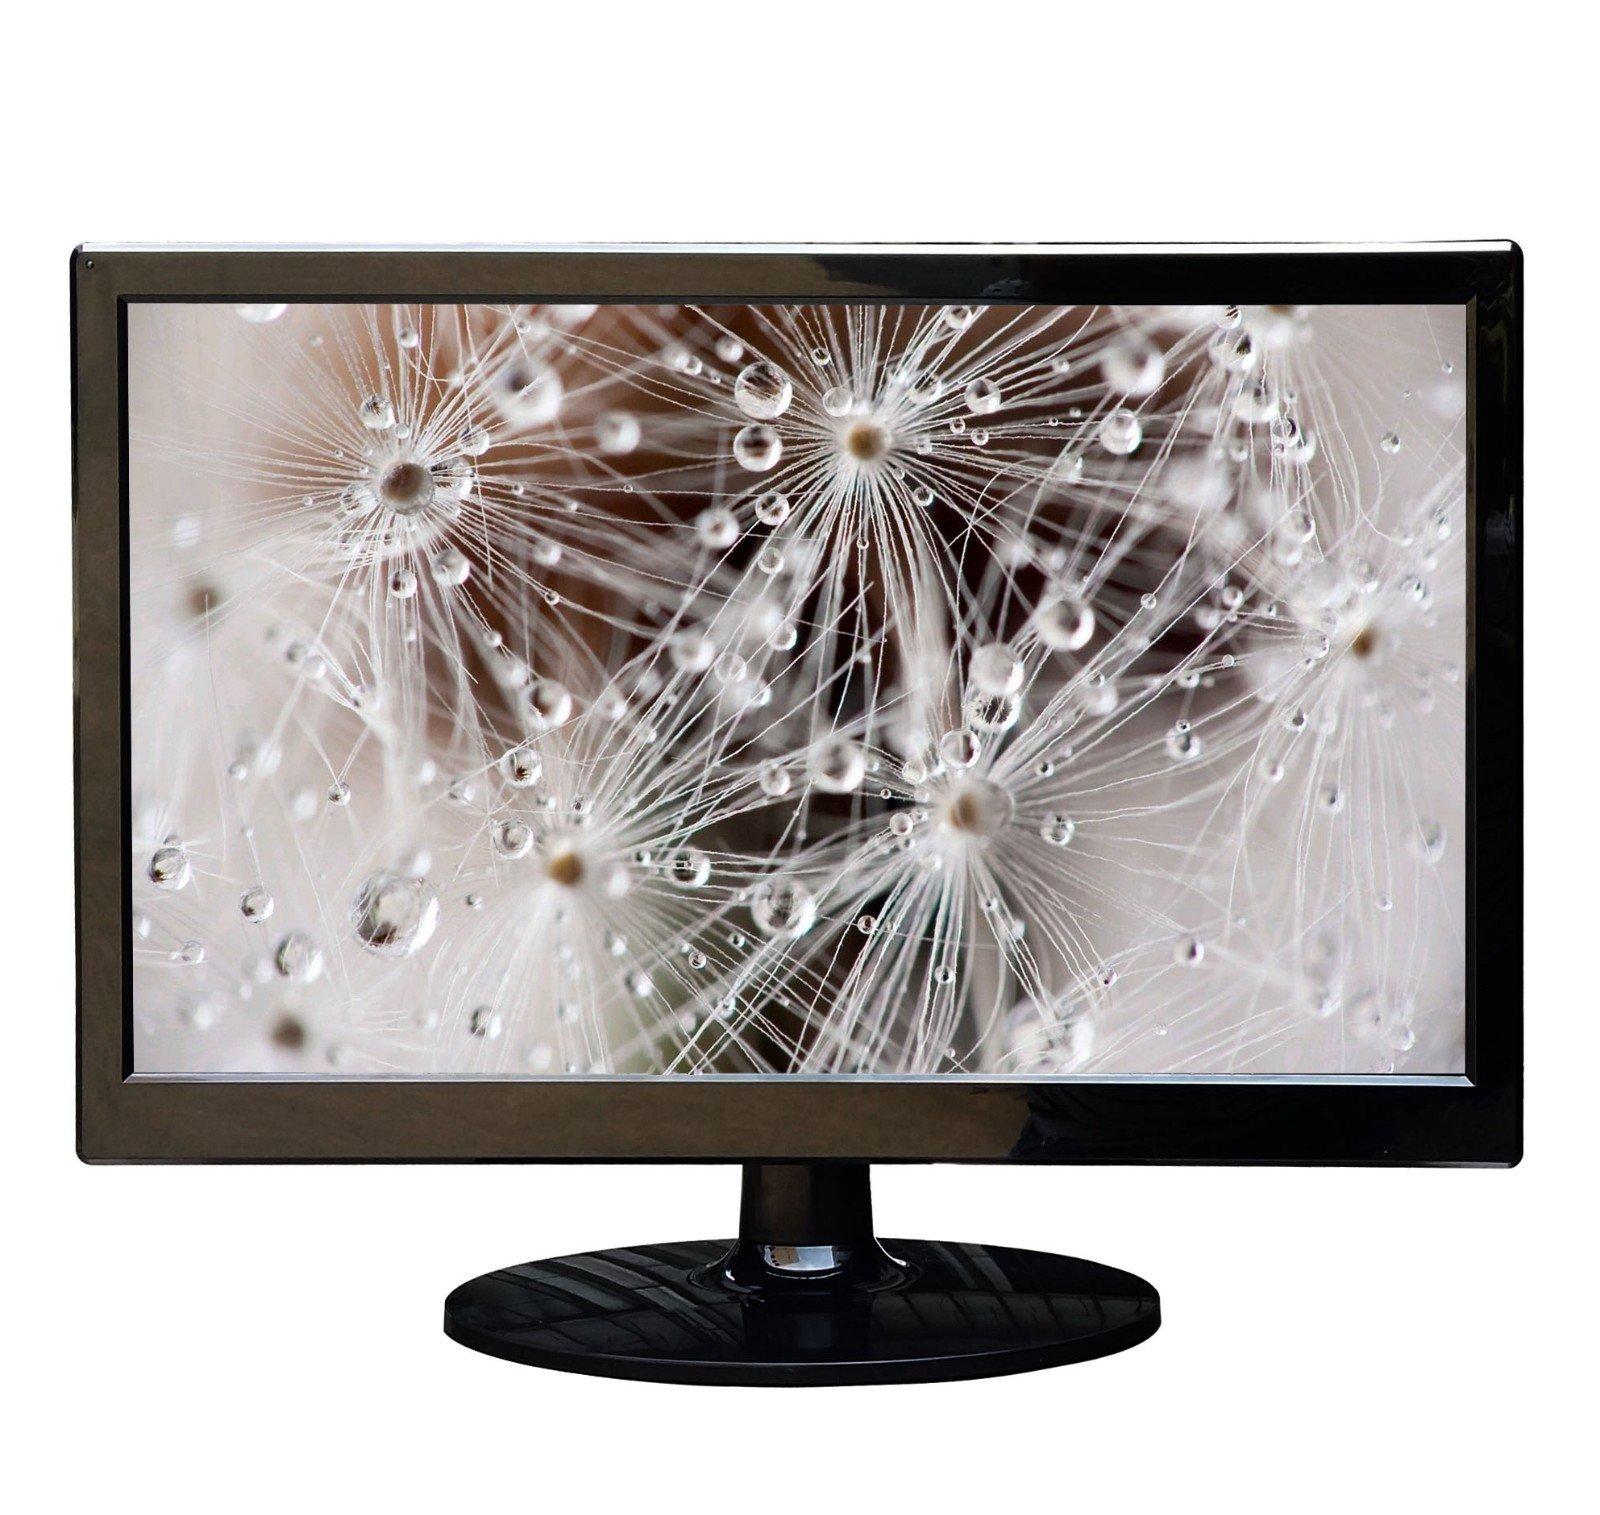 Hot 18 computer monitor displaypc Xinyao LCD Brand